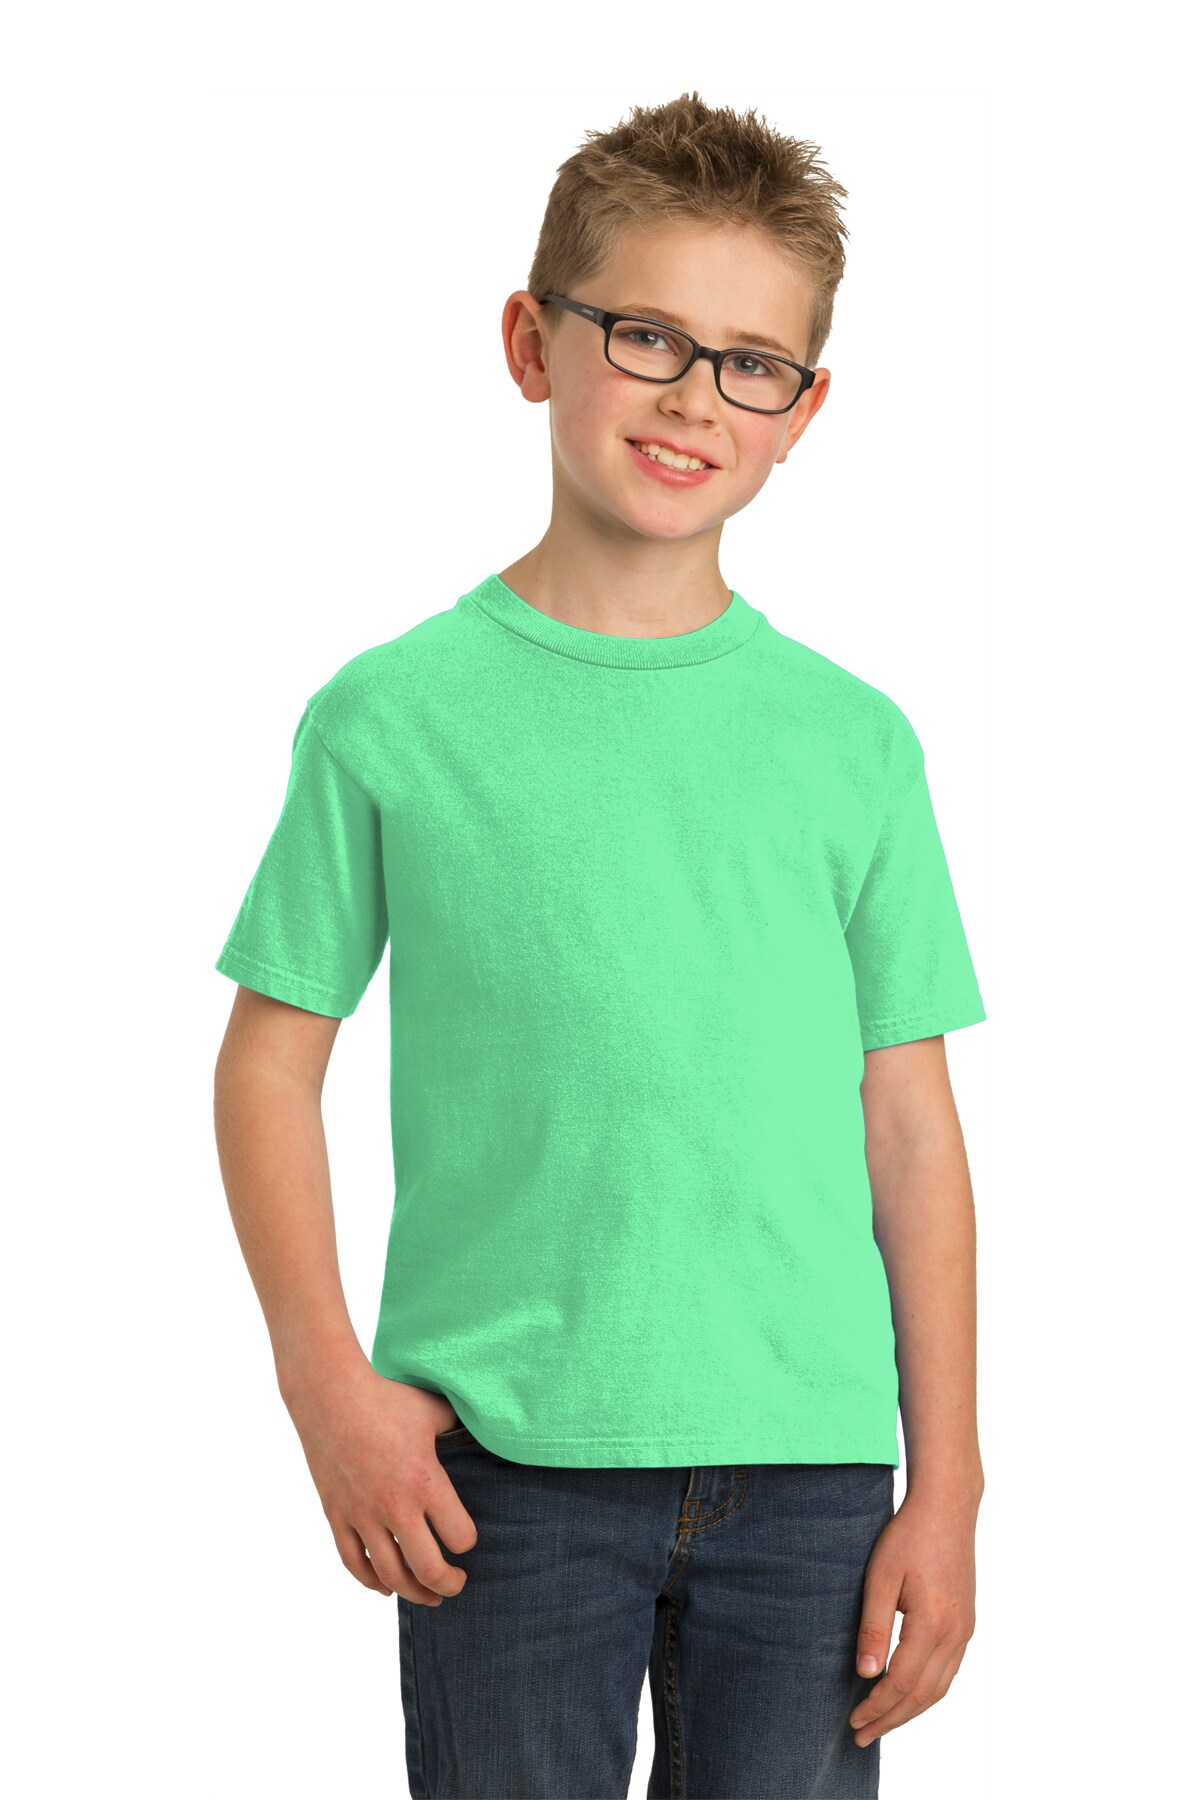 Short Sleeve T-Shirt for Youth | RADYAN®